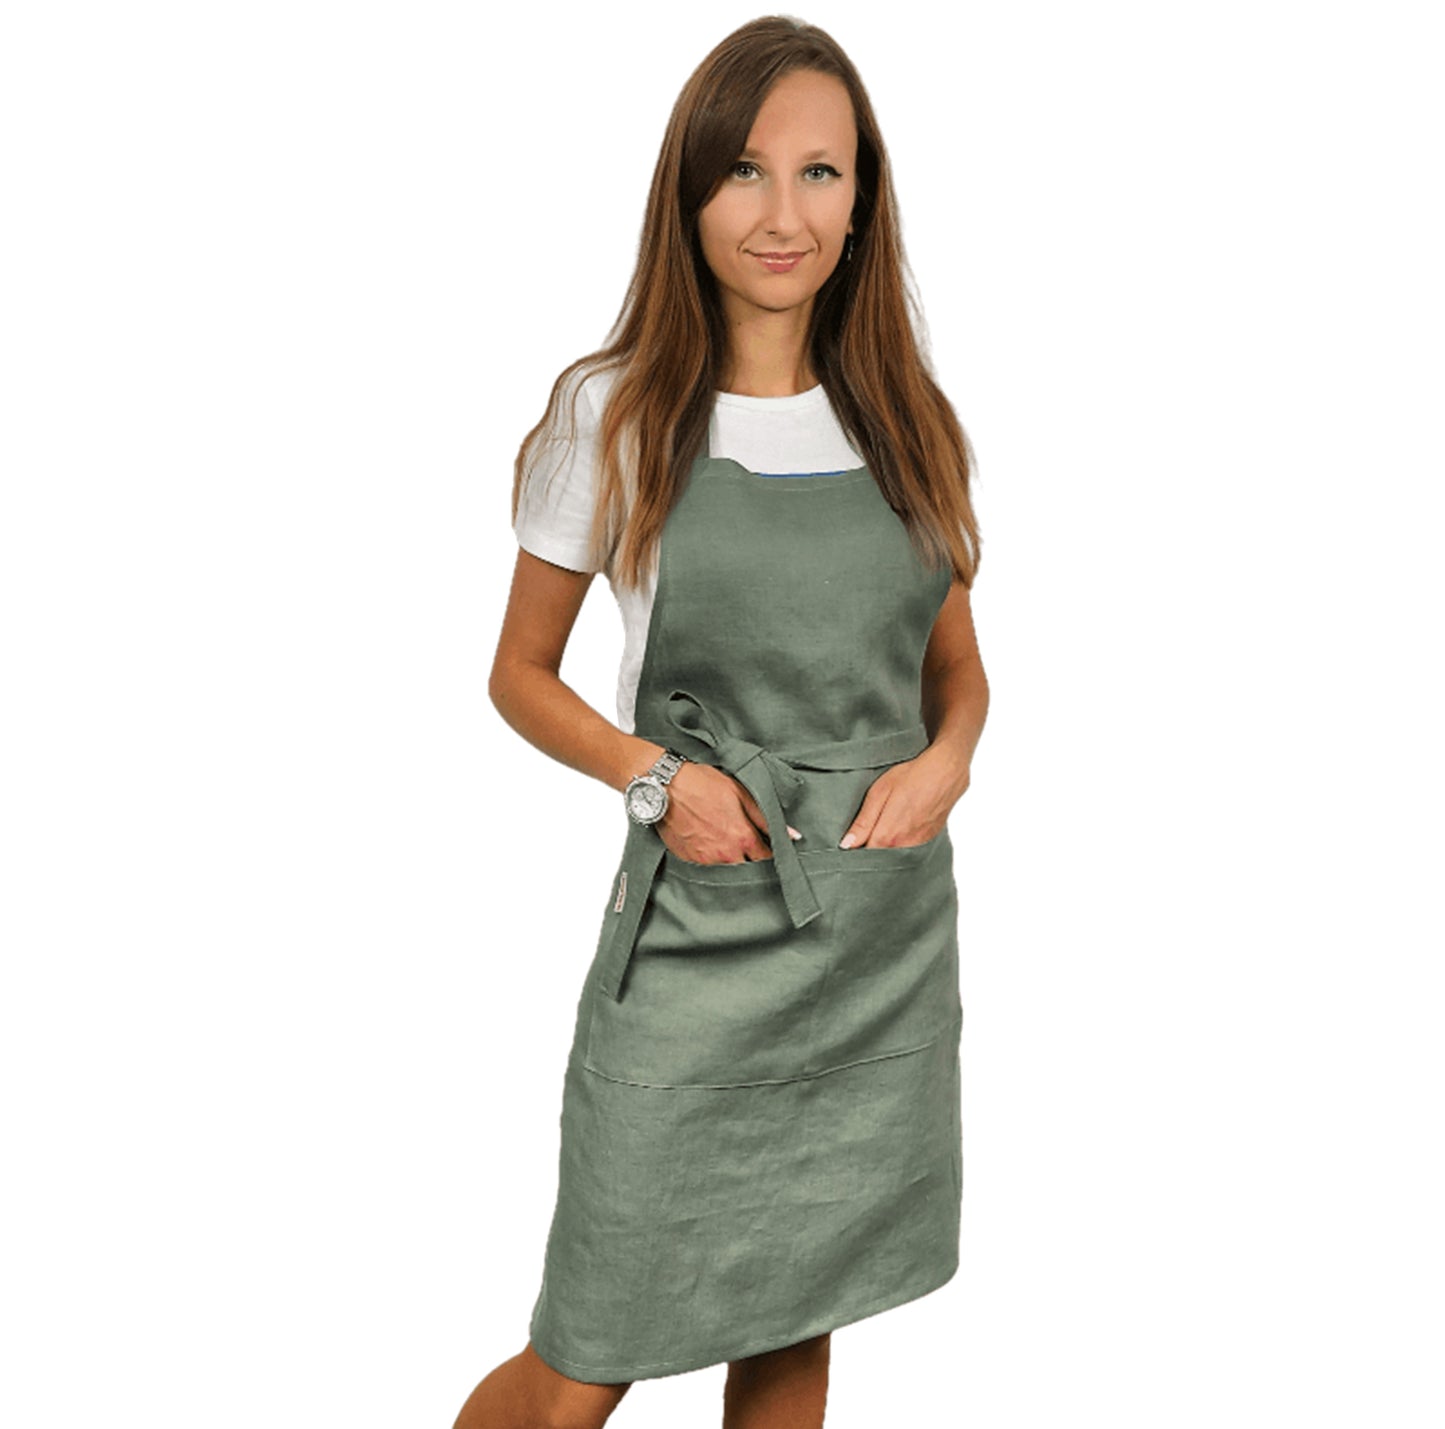 Kitchen apron, Linen apron, Apron with pockets, Cooking apron